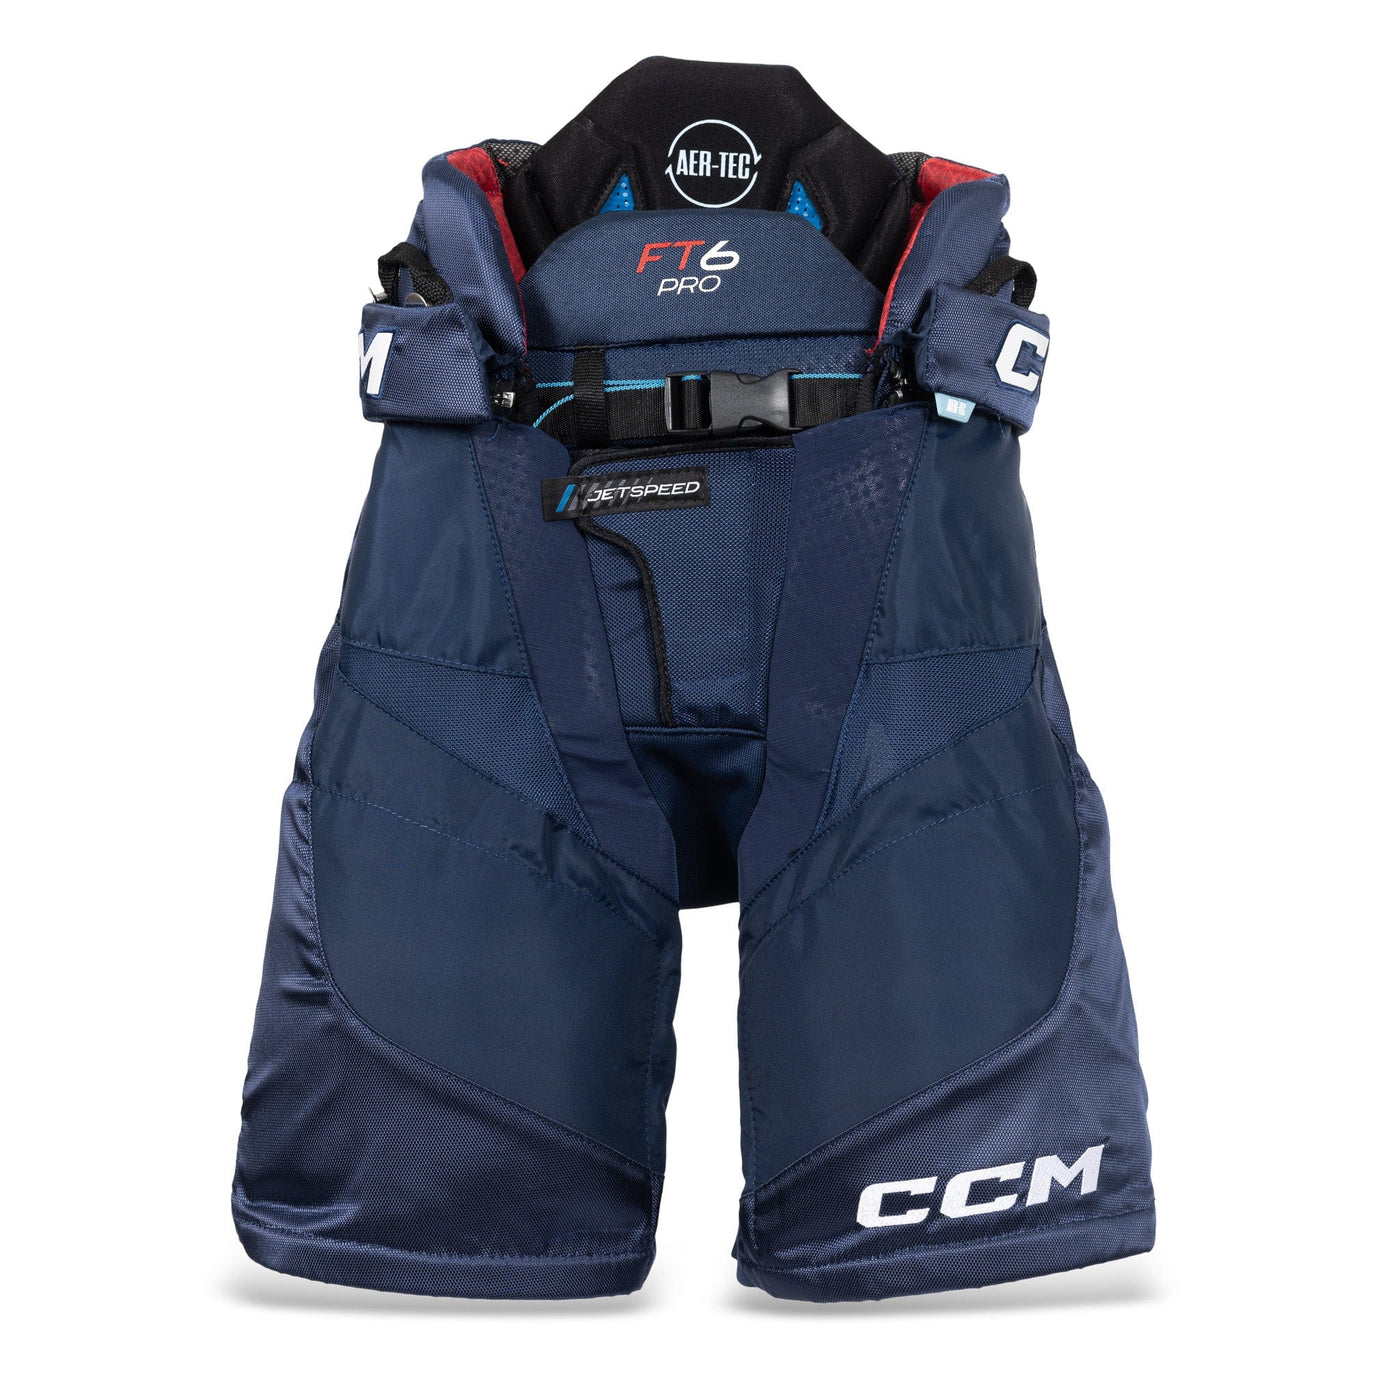 CCM Jetspeed FT6 Pro Senior Hockey Pants - TheHockeyShop.com